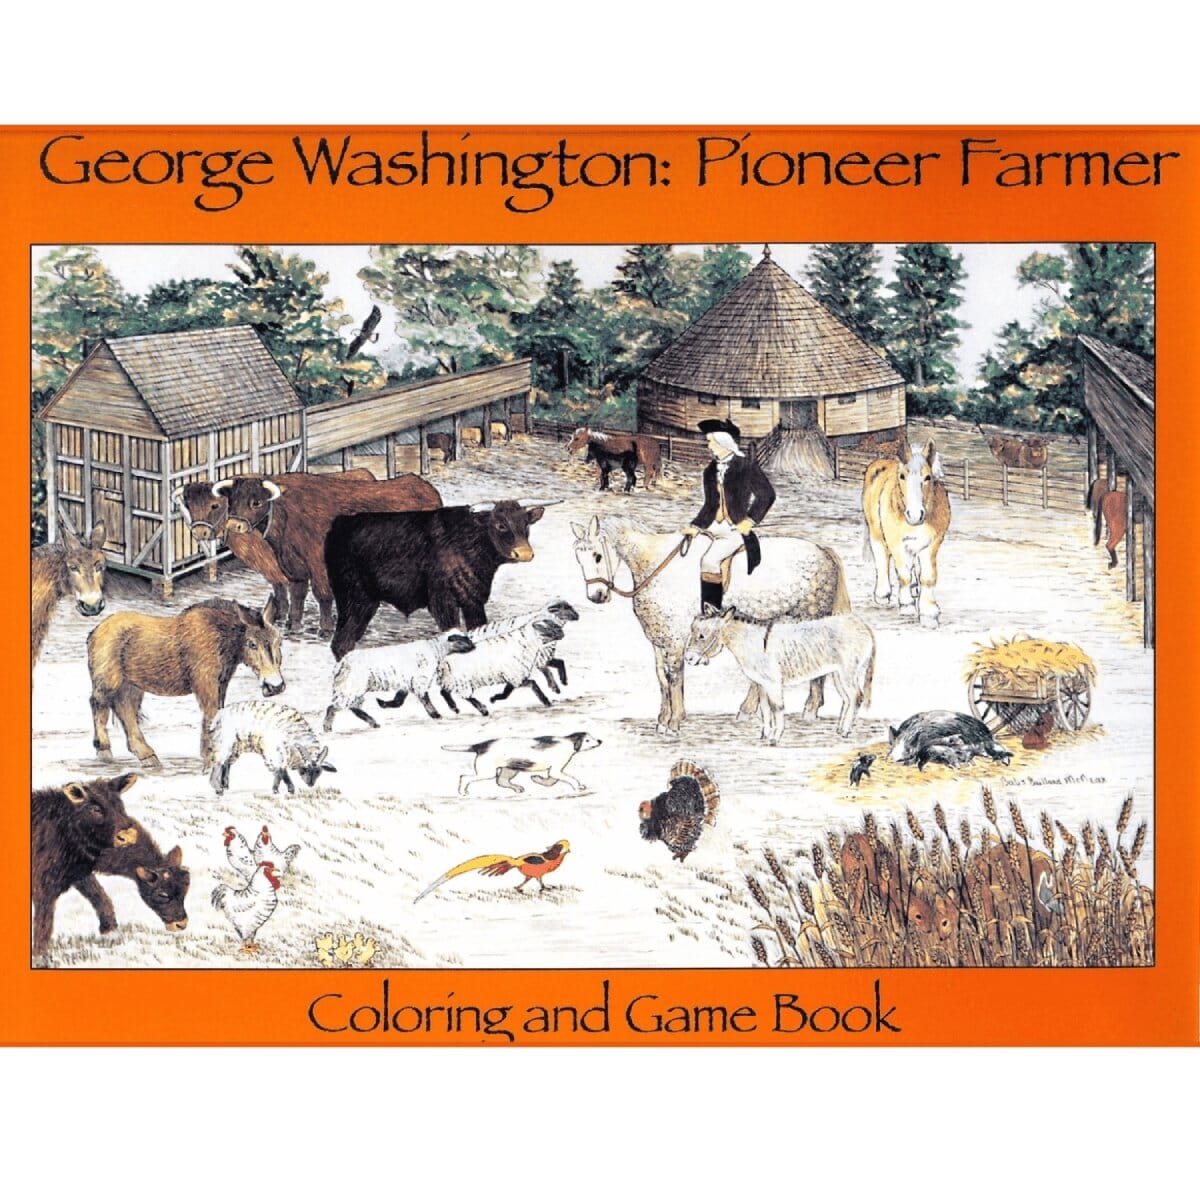 George Washington: Pioneer Farmer Coloring Book